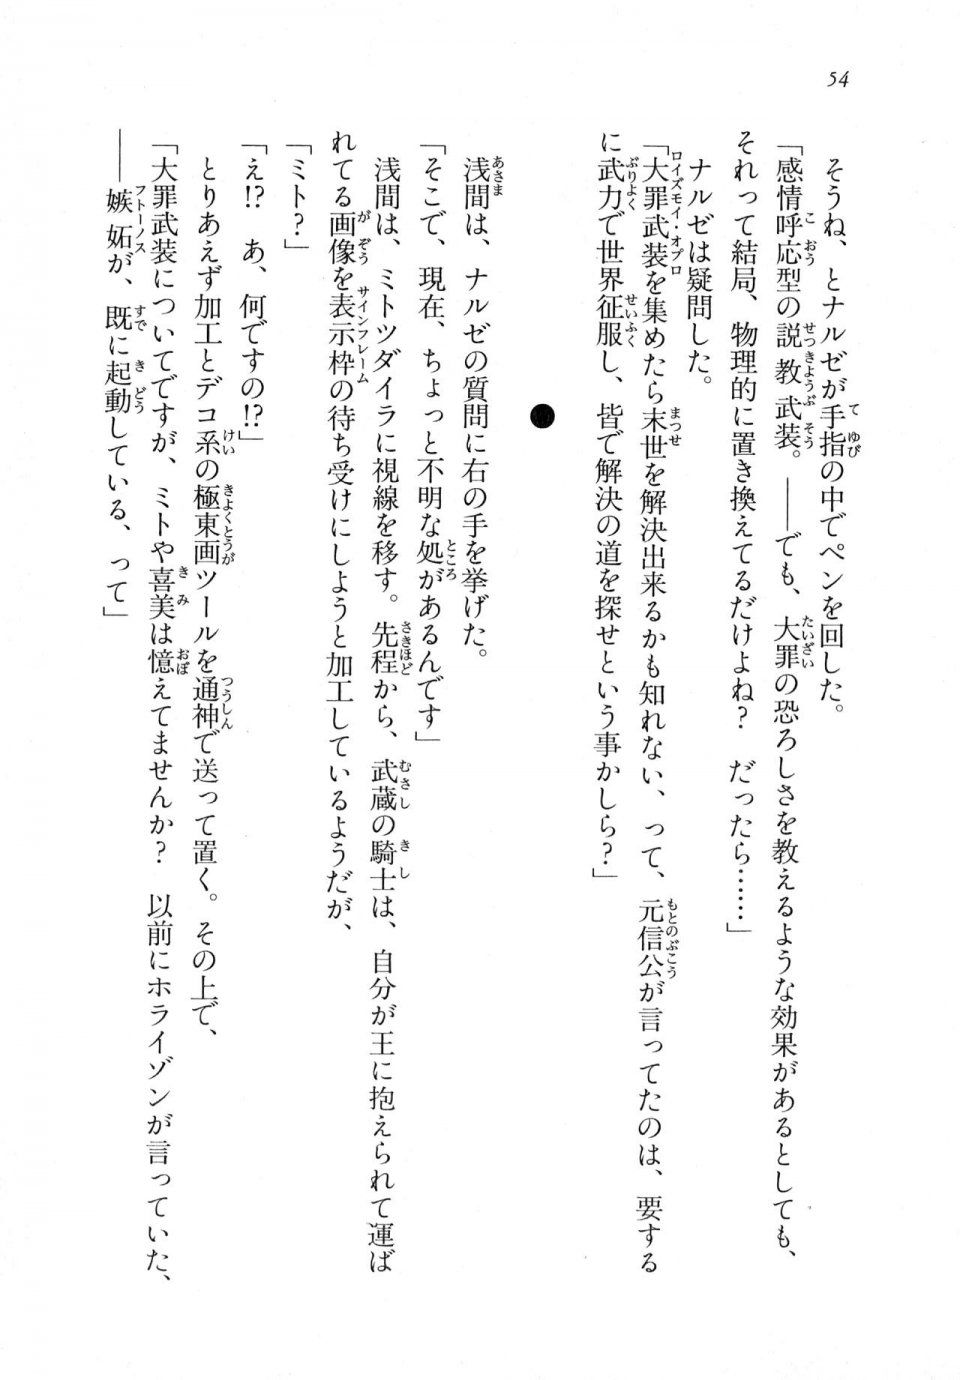 Kyoukai Senjou no Horizon LN Vol 18(7C) Part 1 - Photo #54